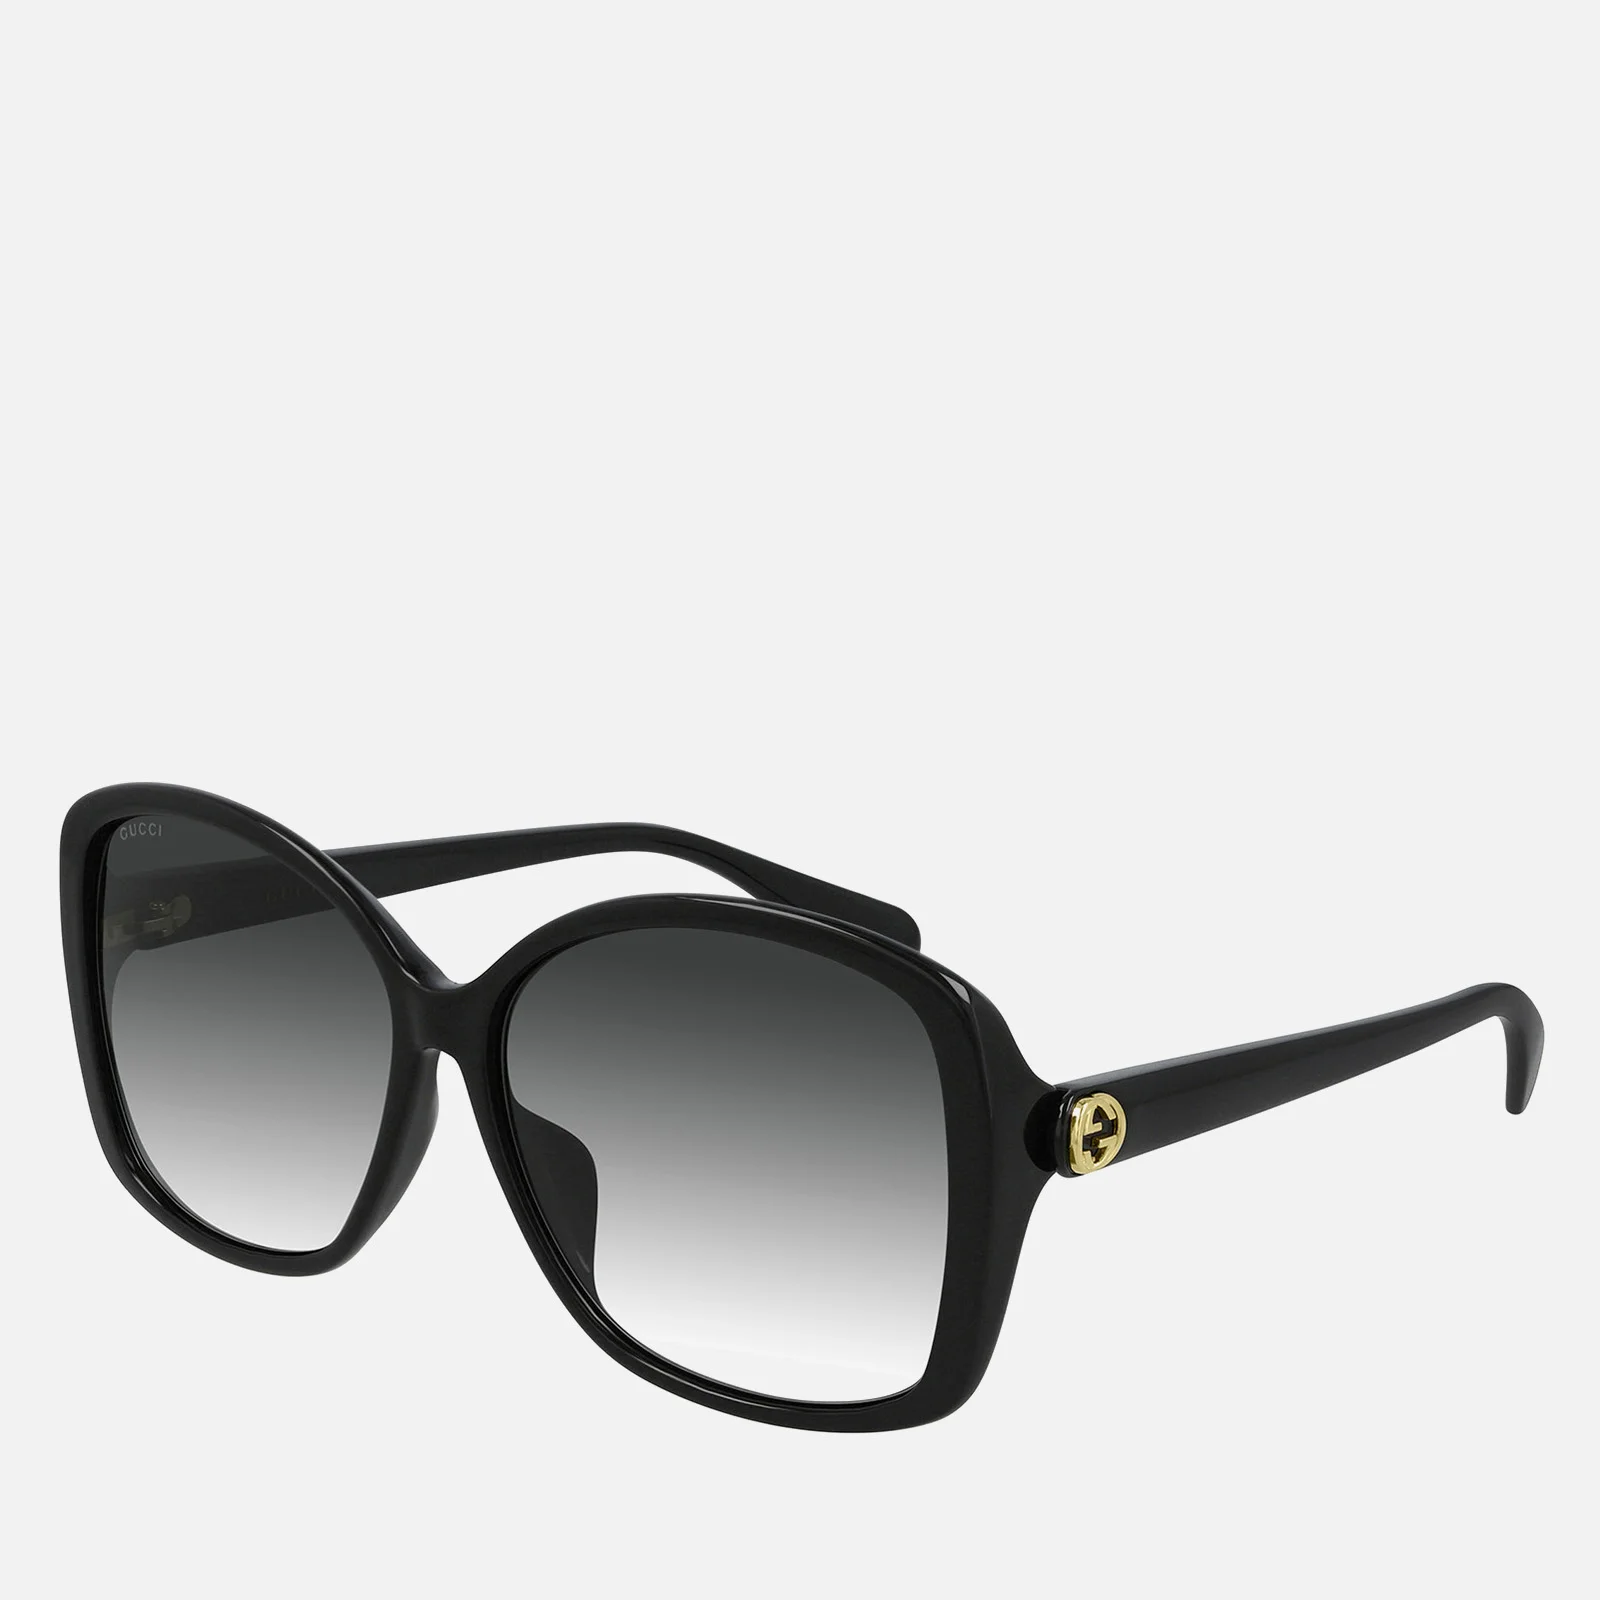 Gucci Women's Gradient Square Frame Acetate Sunglasses - Black/Black/Grey Image 1